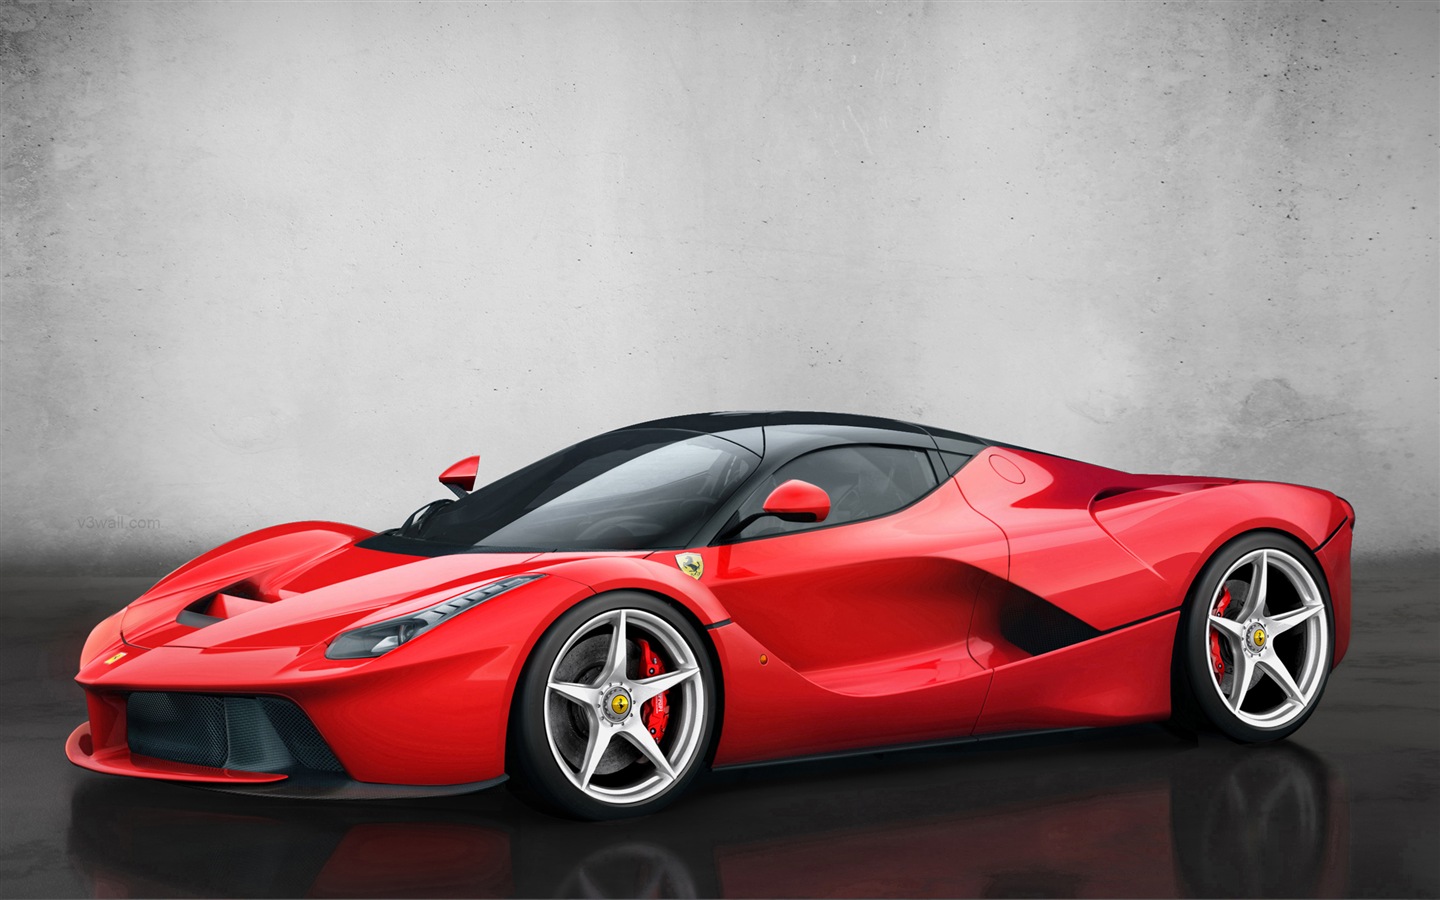 2013 Ferrari LaFerrari red supercar HD Wallpaper #7 - 1440x900